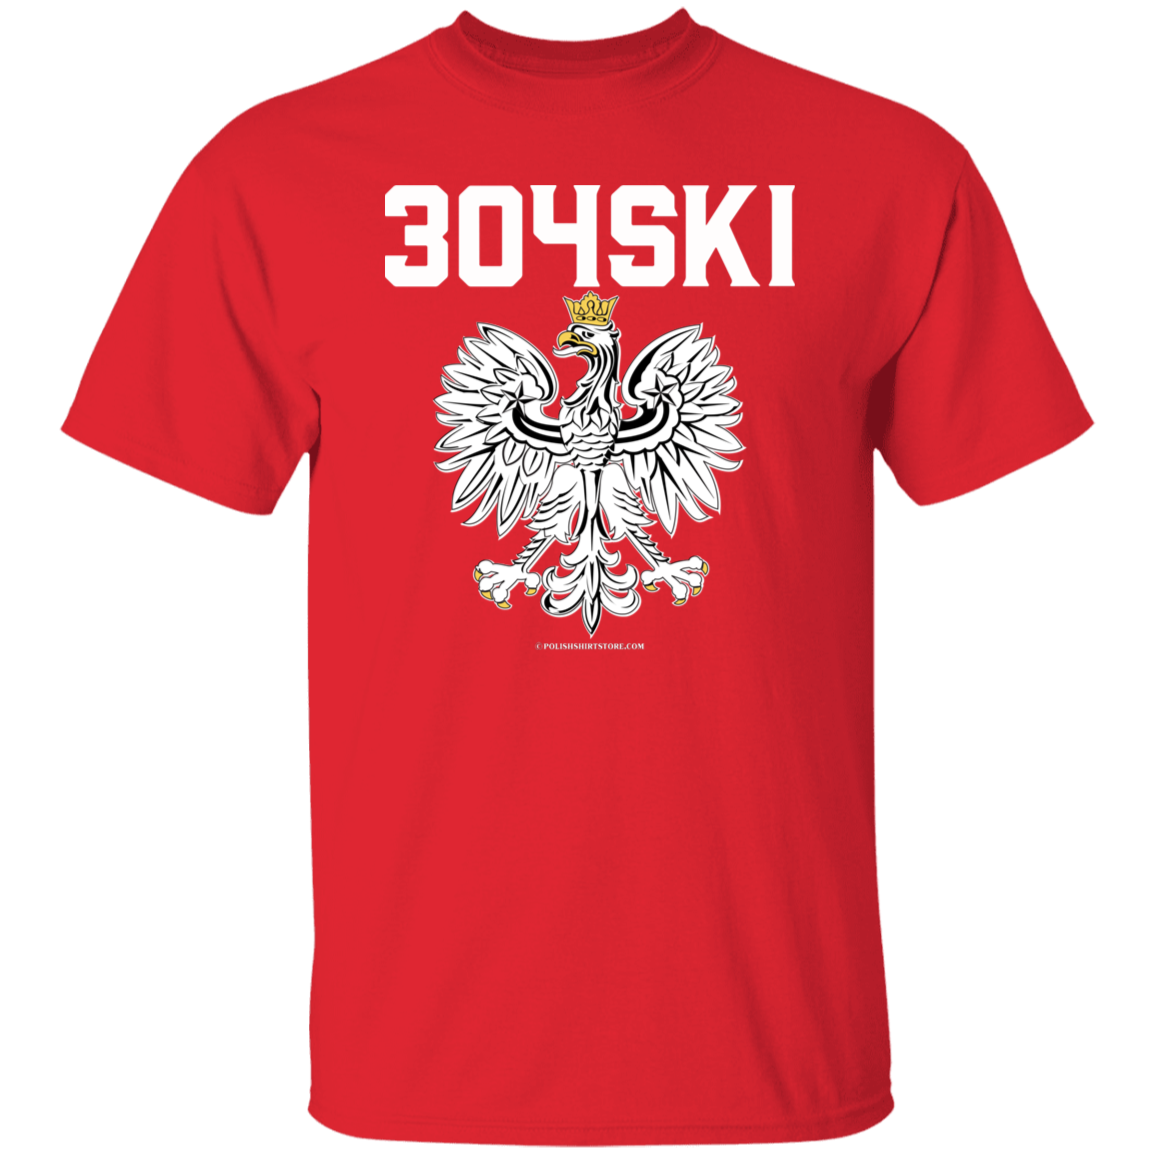 304SKI Apparel CustomCat G500 5.3 oz. T-Shirt Red S